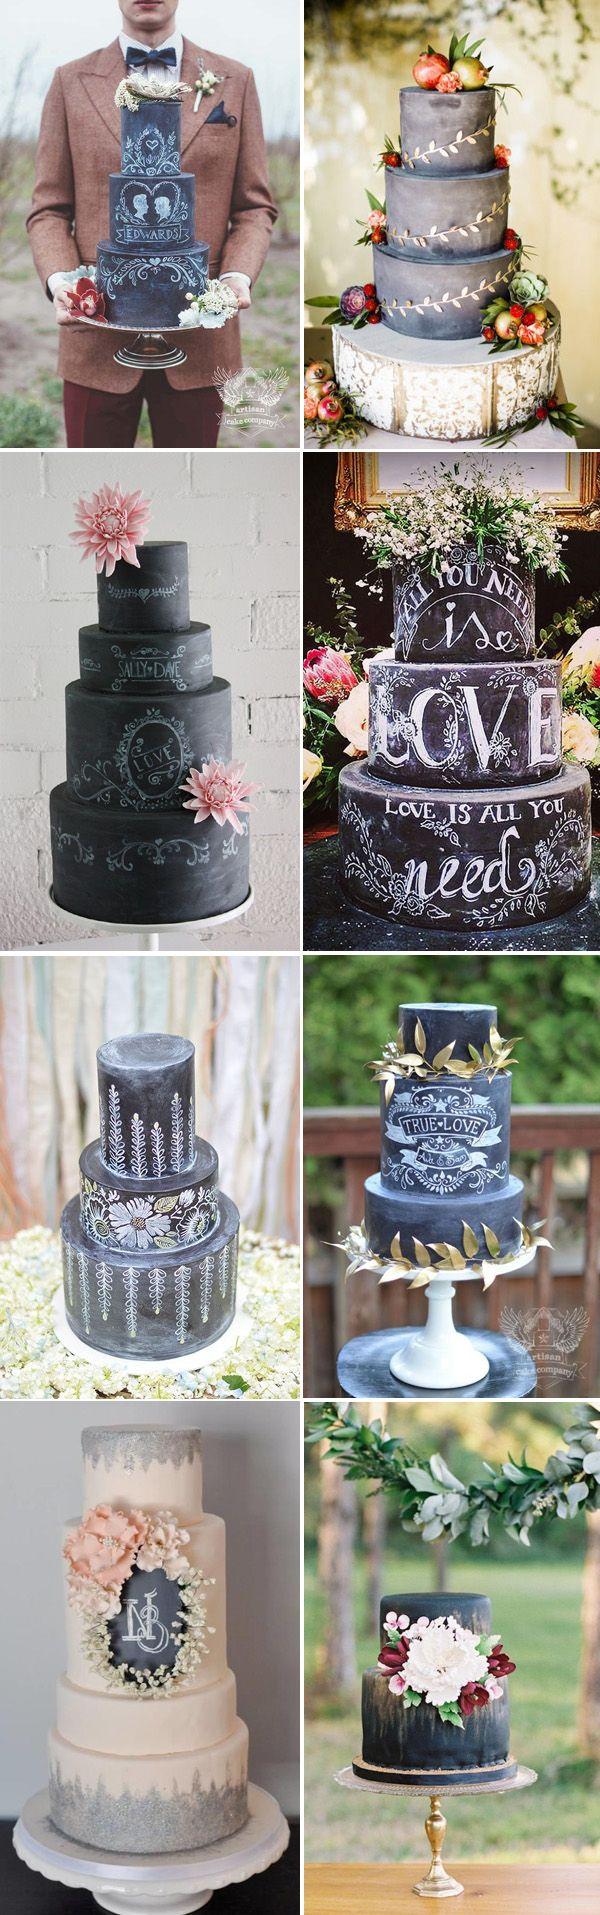 Wedding - 58 Creative Wedding Cake Ideas (with Tips)